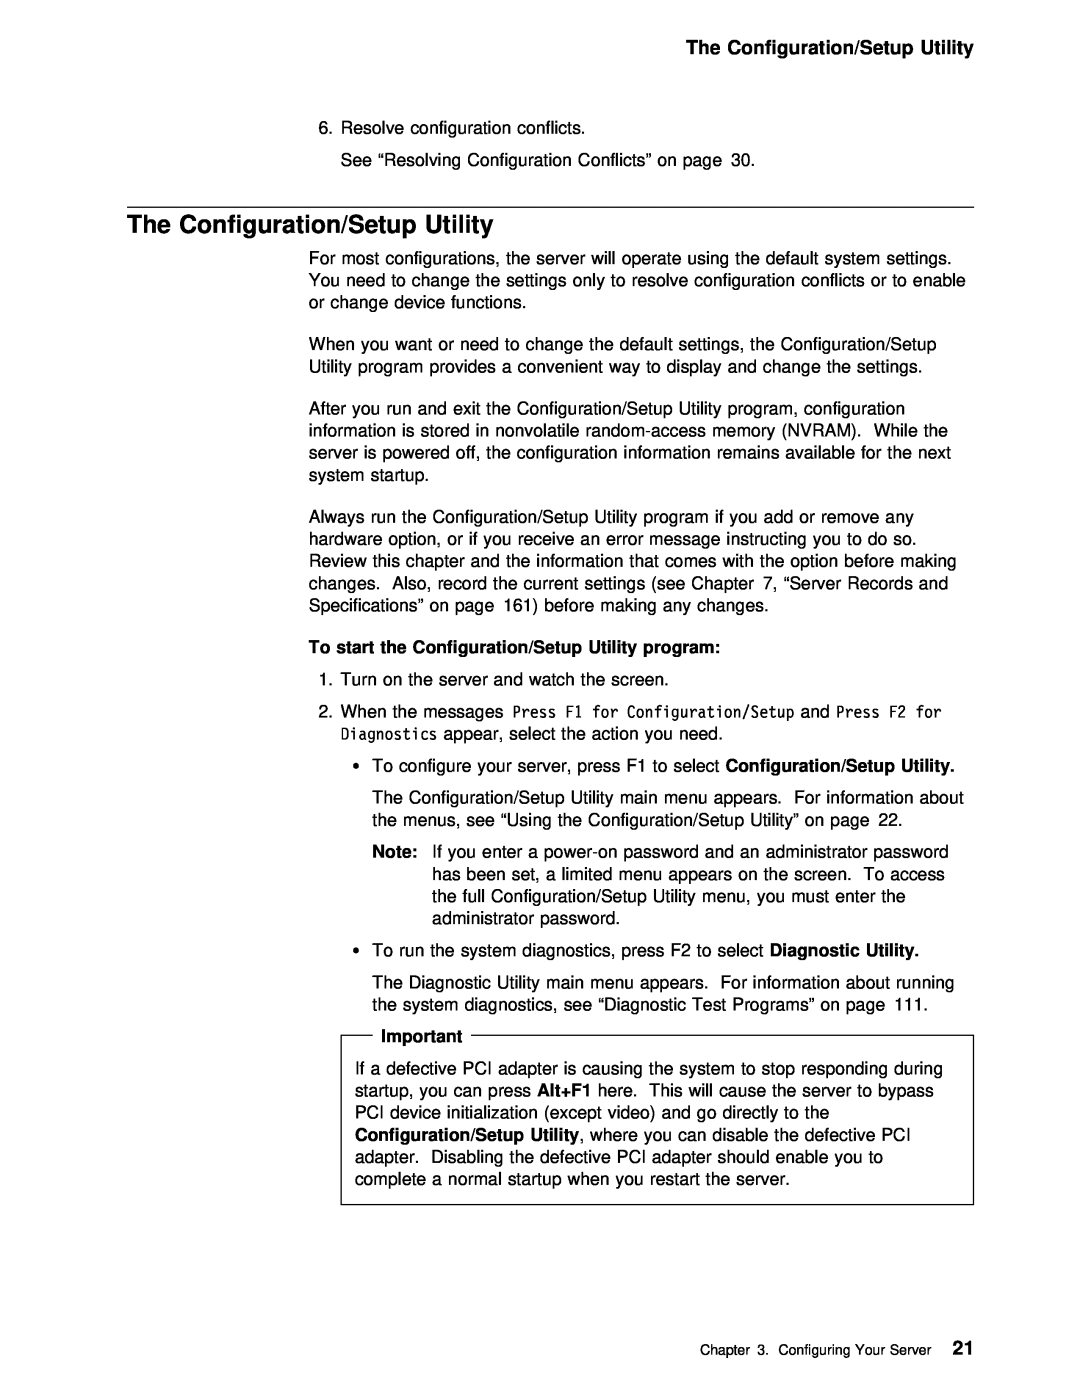 IBM 5000 manual The Configuration/Setup Utility 